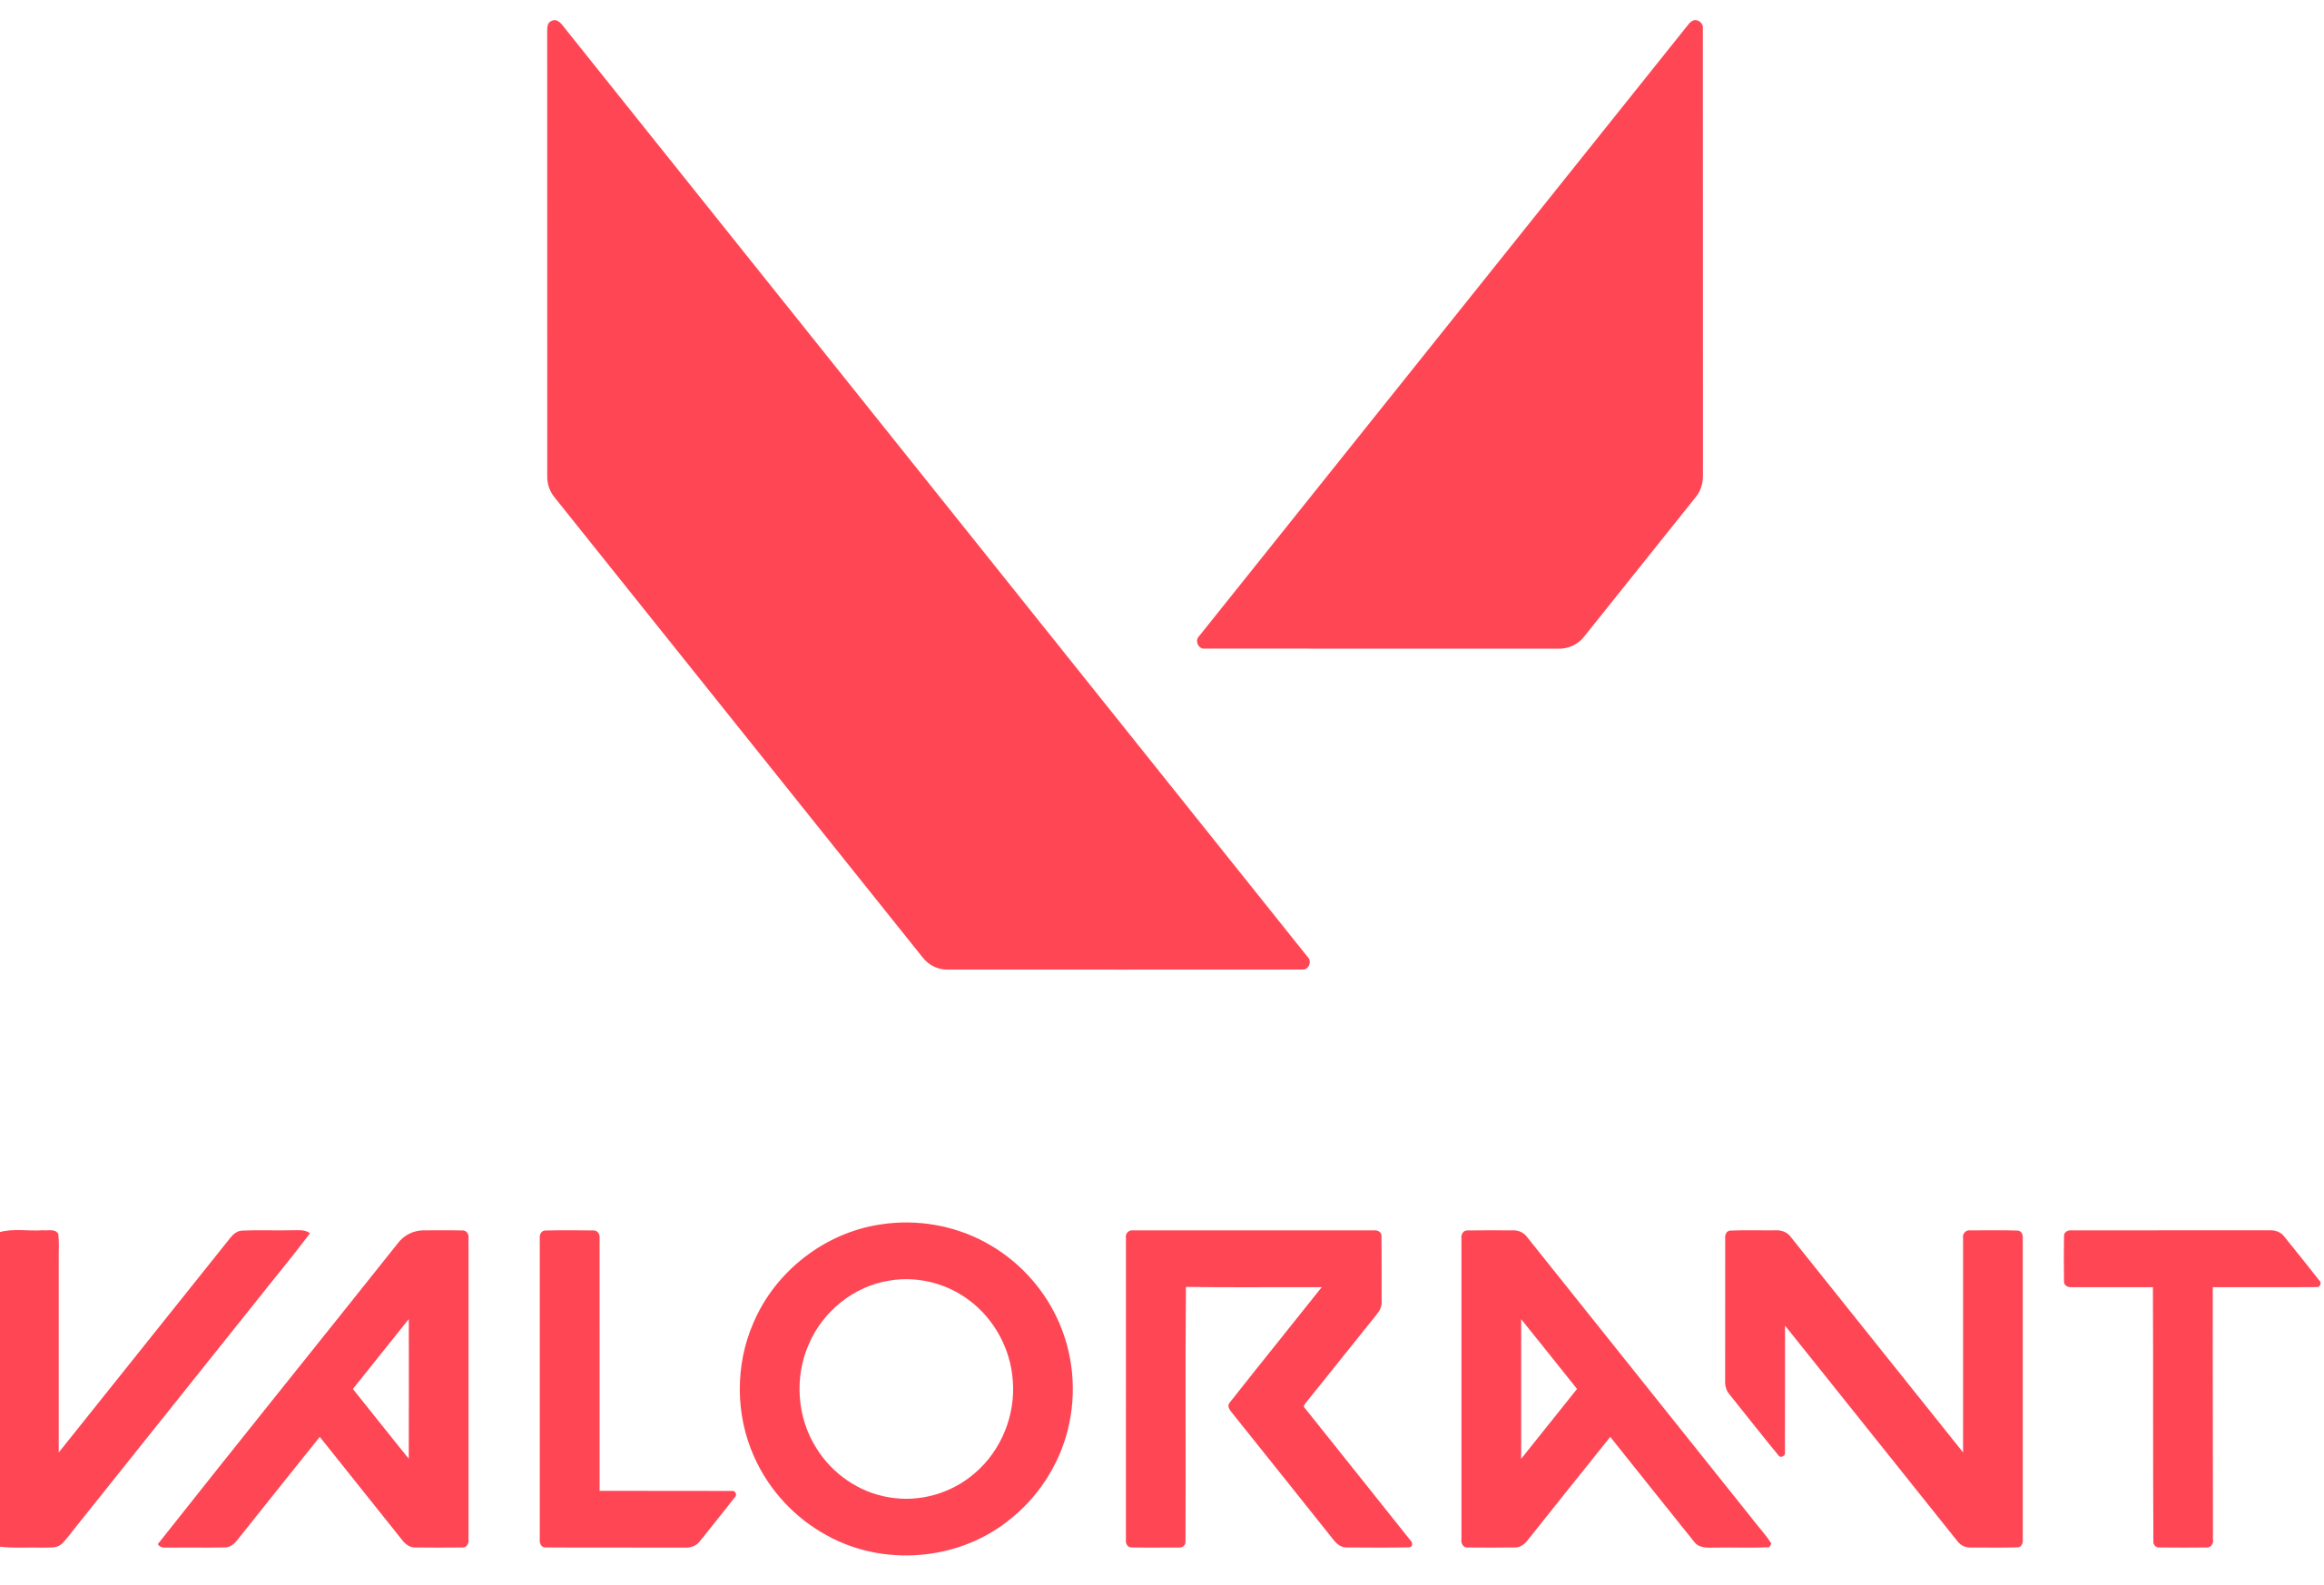 Archivo:Valorant logo - pink color version.svg - Wikipedia, la enciclopedia libre